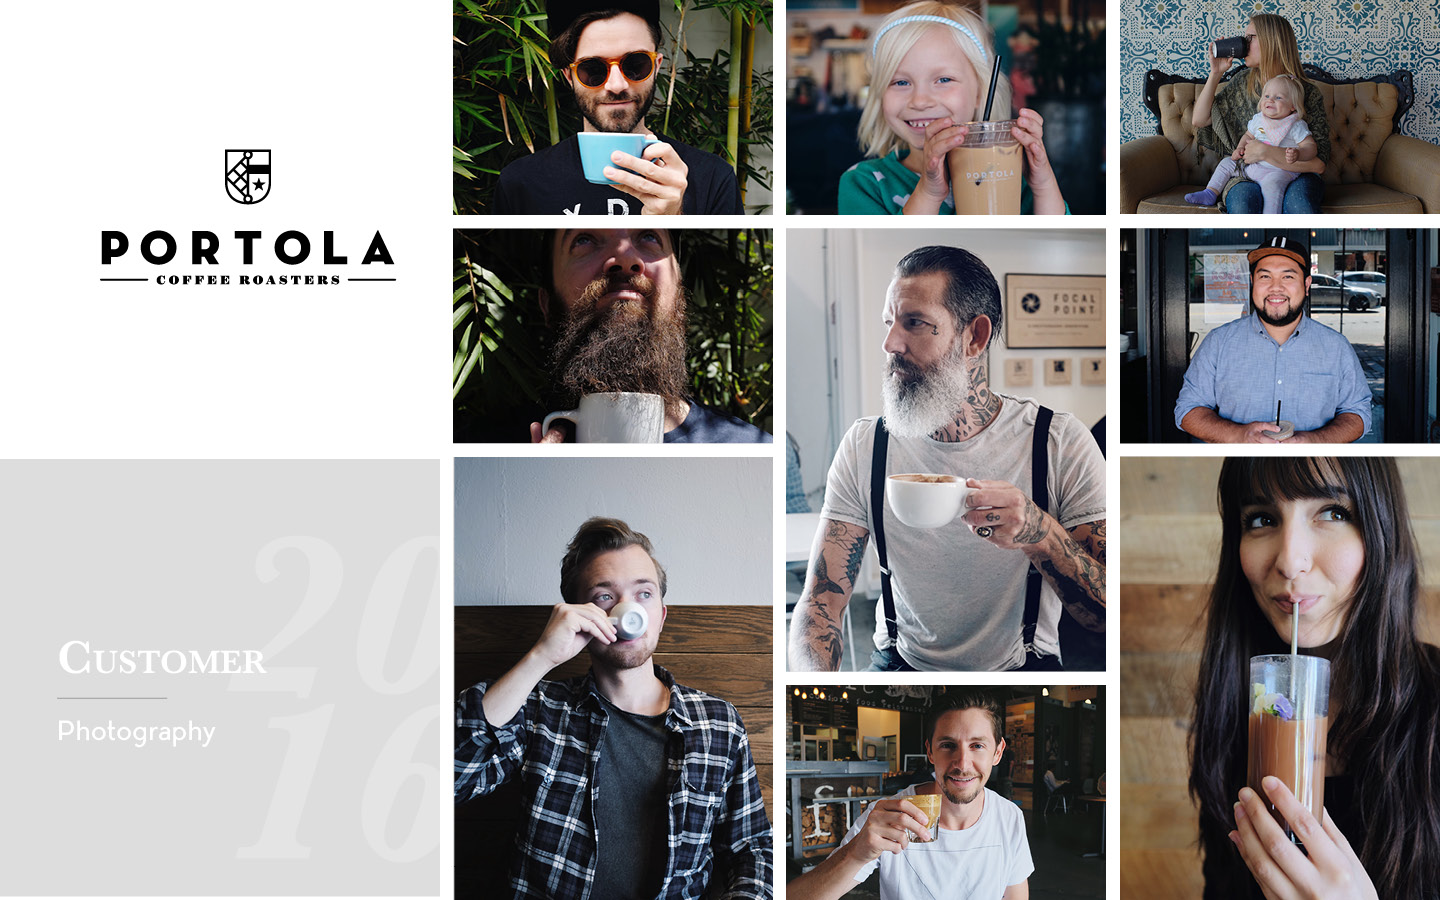 Patrick Hardy Design Social Media Photography - Portola Coffee Roasters Customer Photography